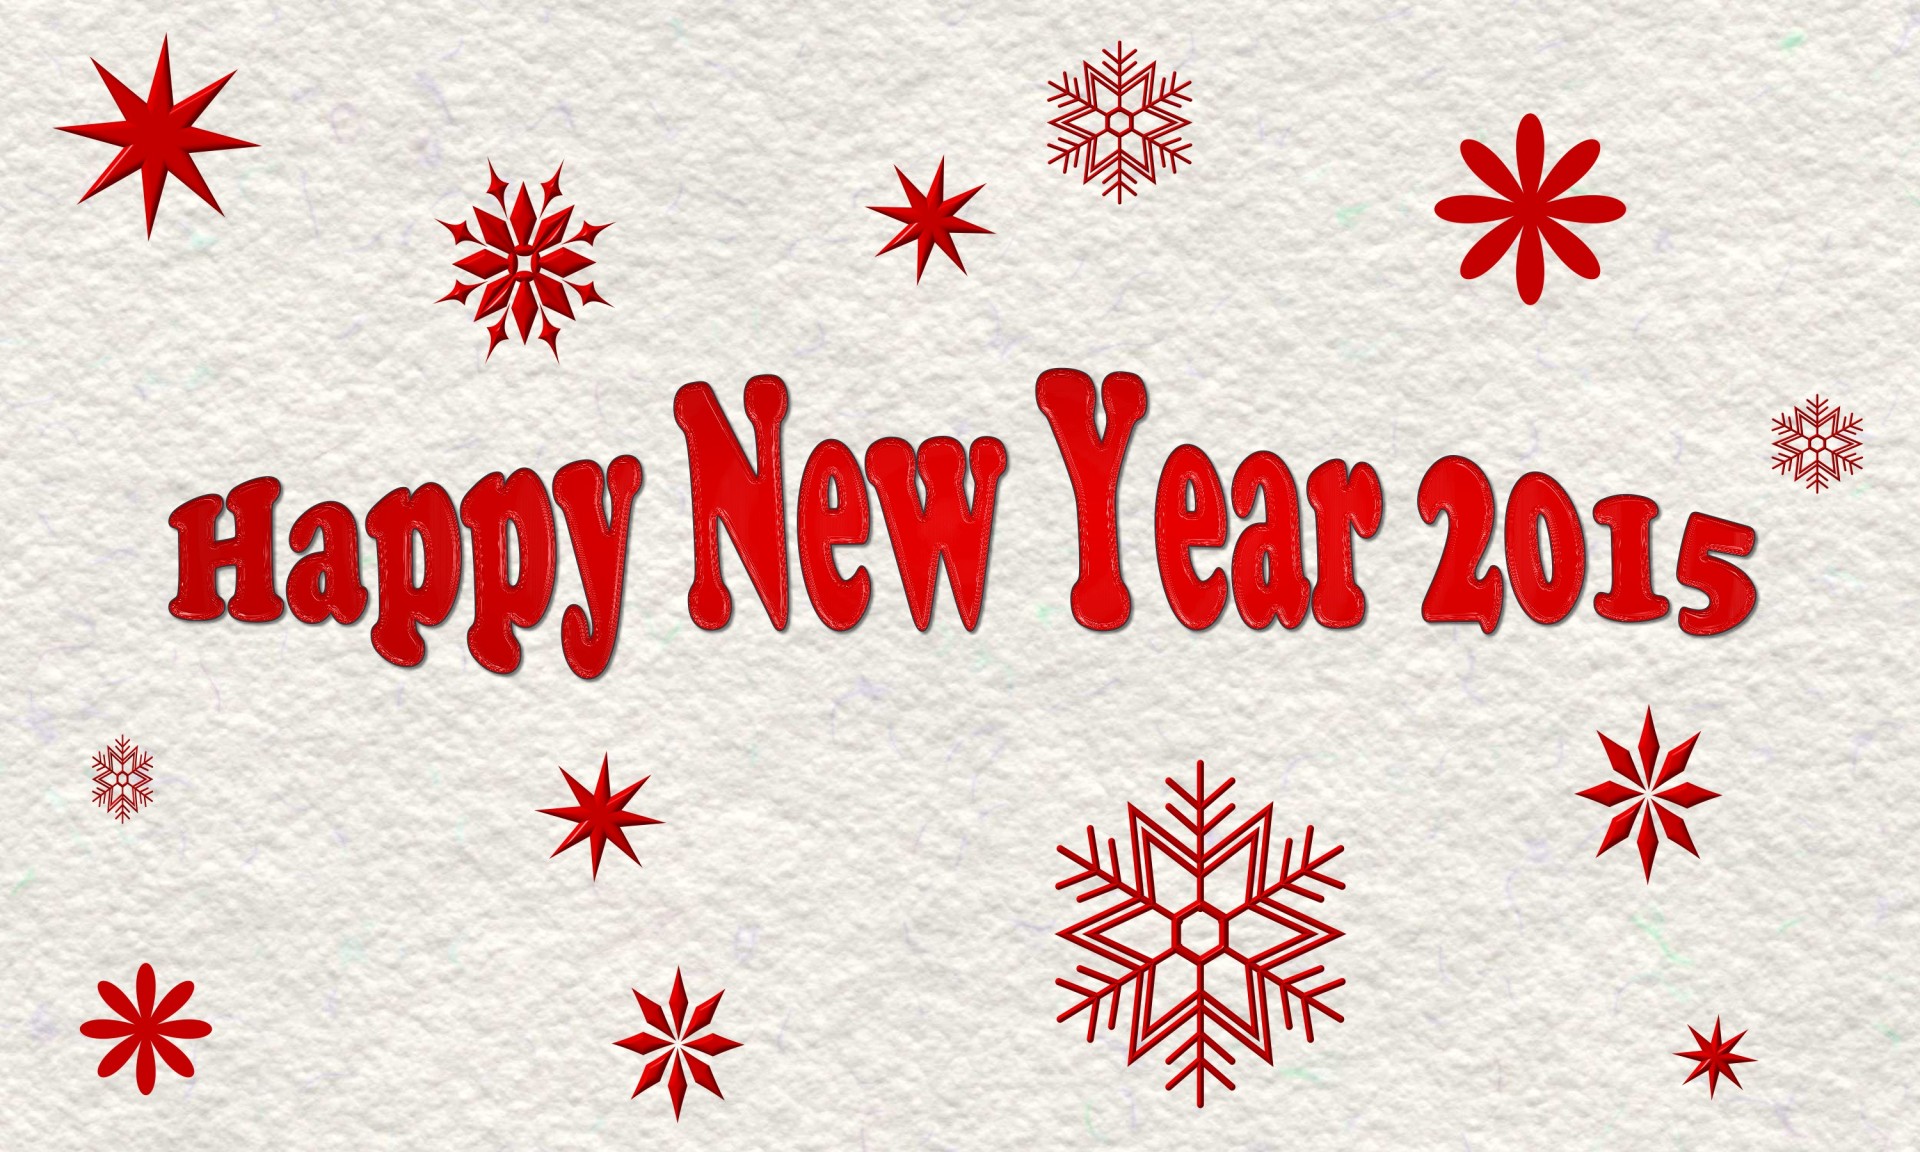 Happy New Year 2015 # 2